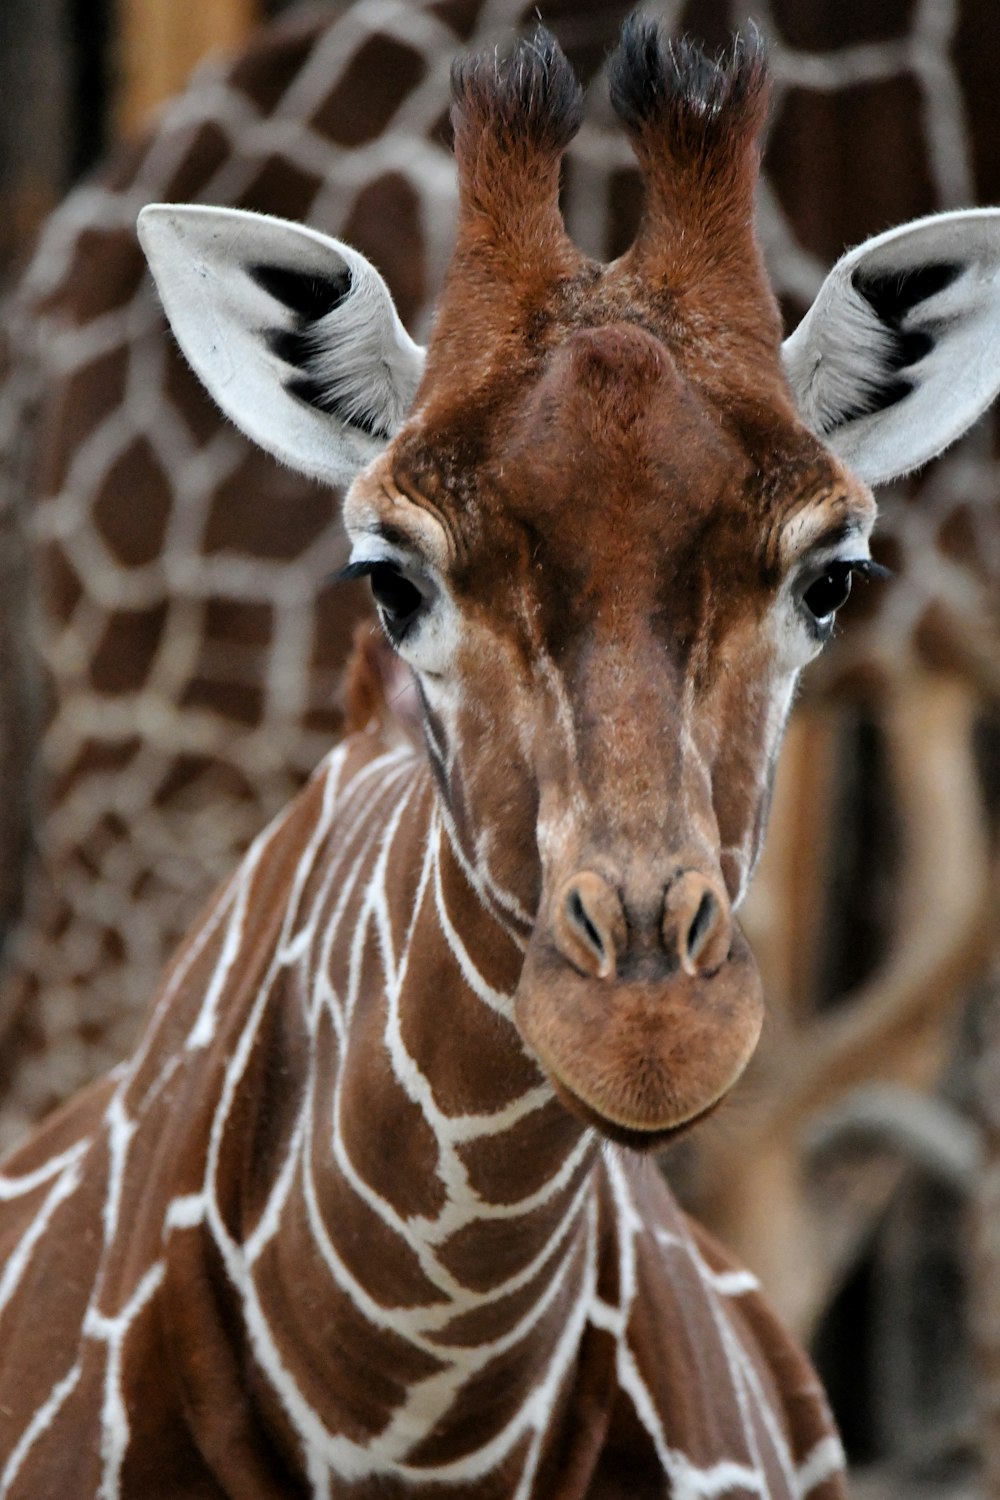 a close up of a giraffe's face with other giraffe